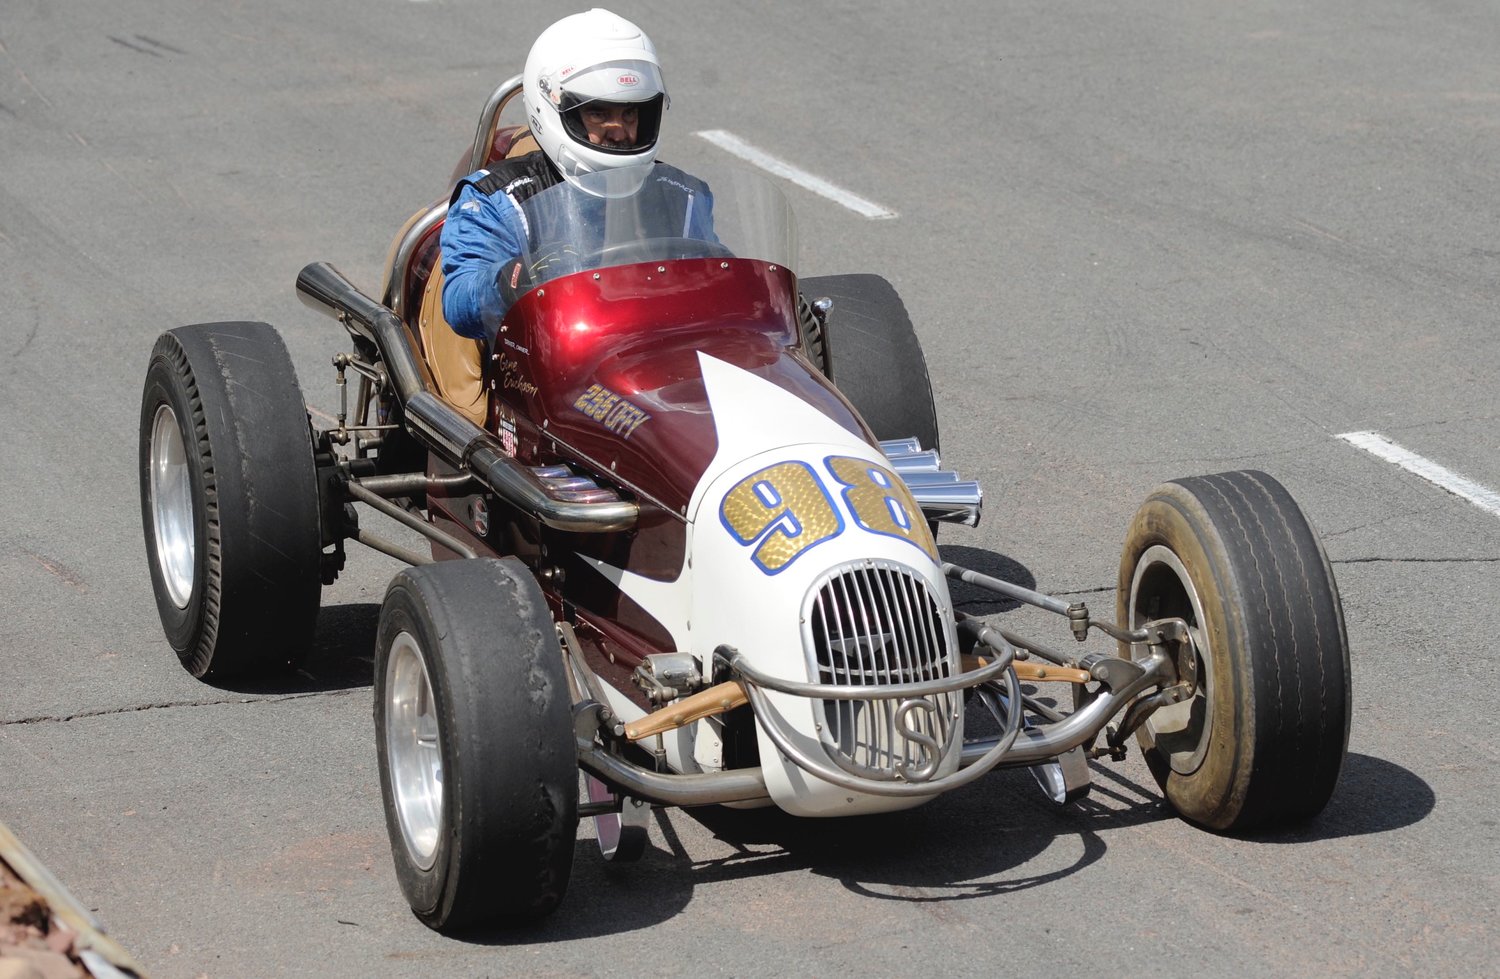 Vintage speed. Keith Majka in #98 takes a few hot laps at Bethel Motor Speedway.